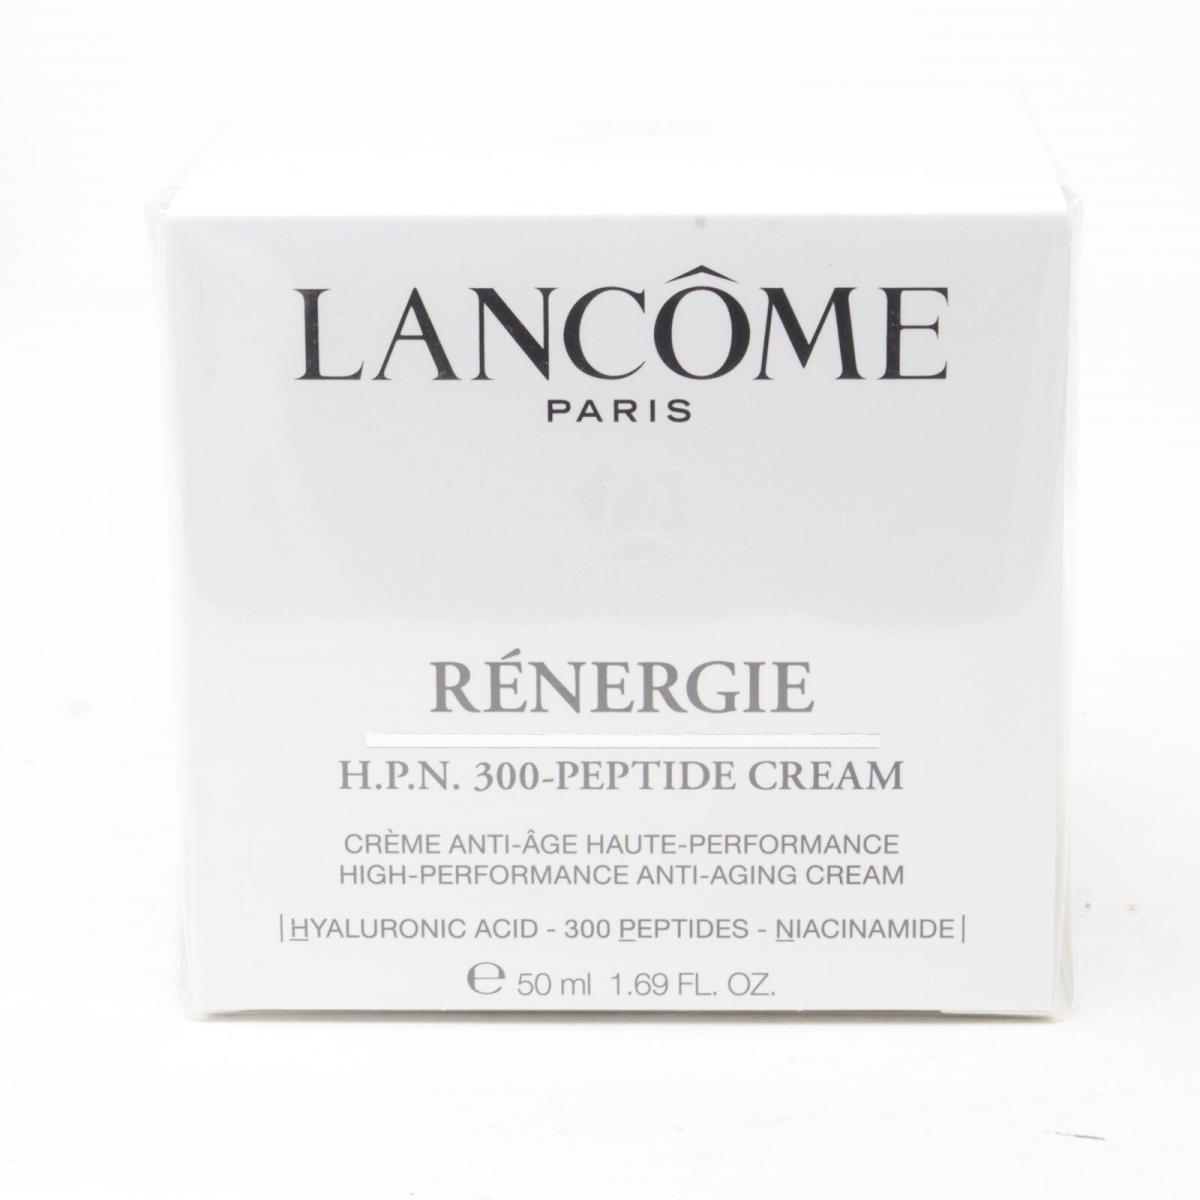 Lancome Renergie H.p.n. 300-Peptide Cream 1.69oz/50ml